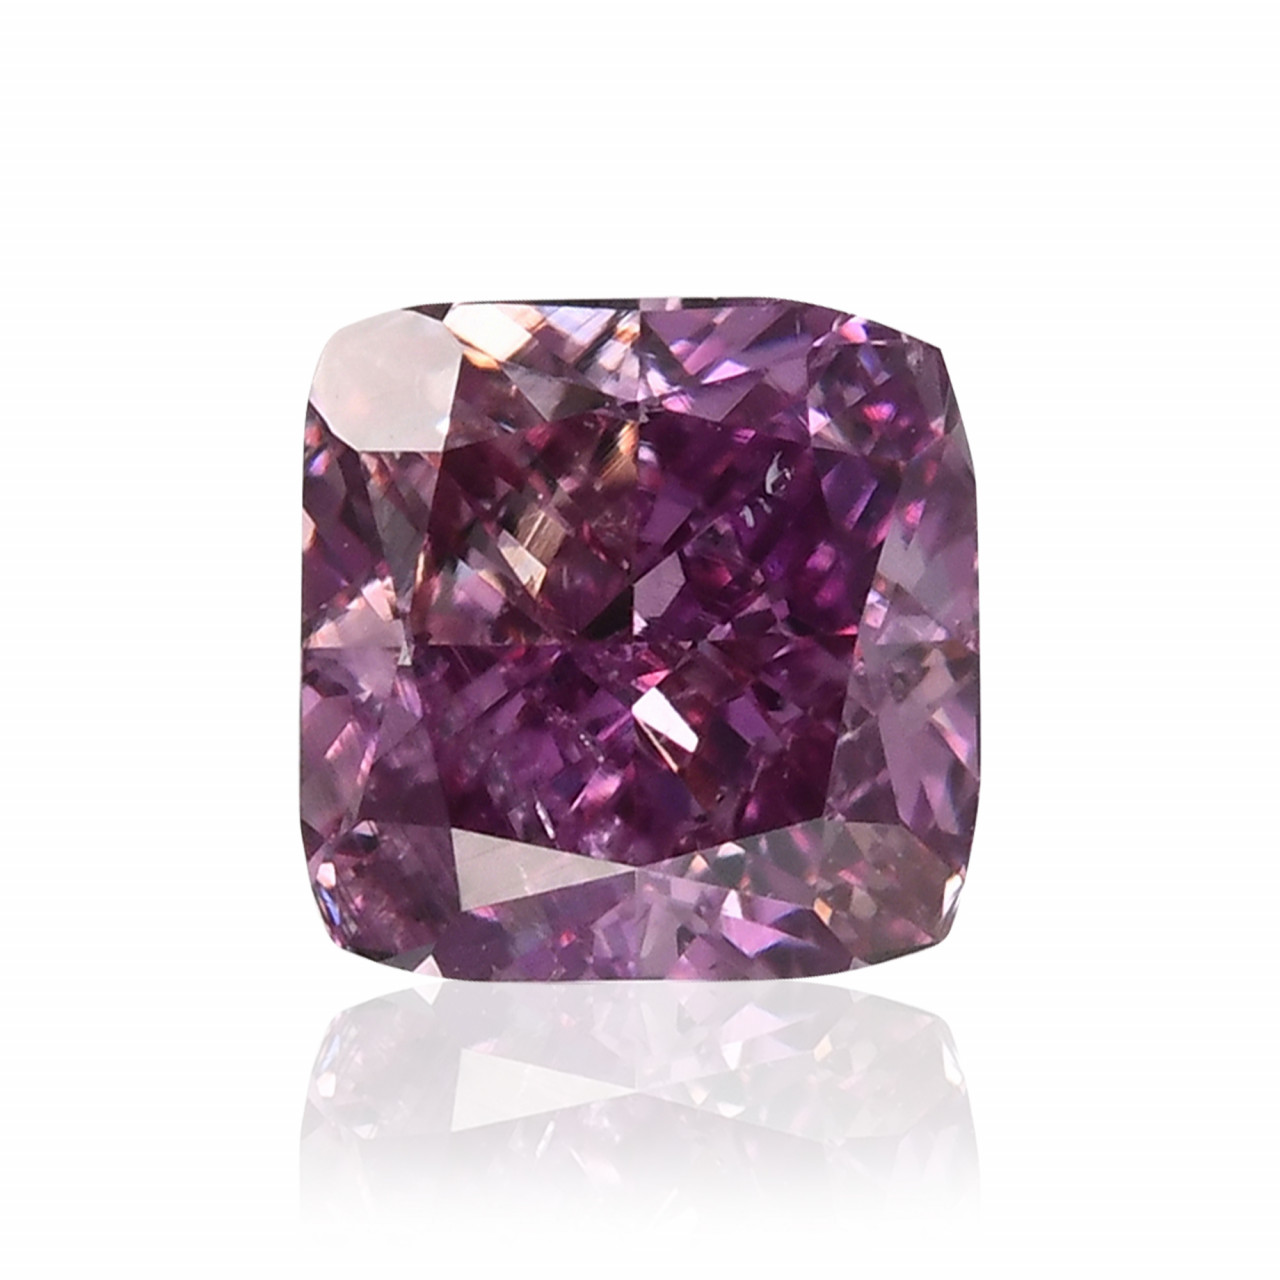 0.57 carat, Fancy Deep Pink Purple Diamond, Cushion Shape, SI1 